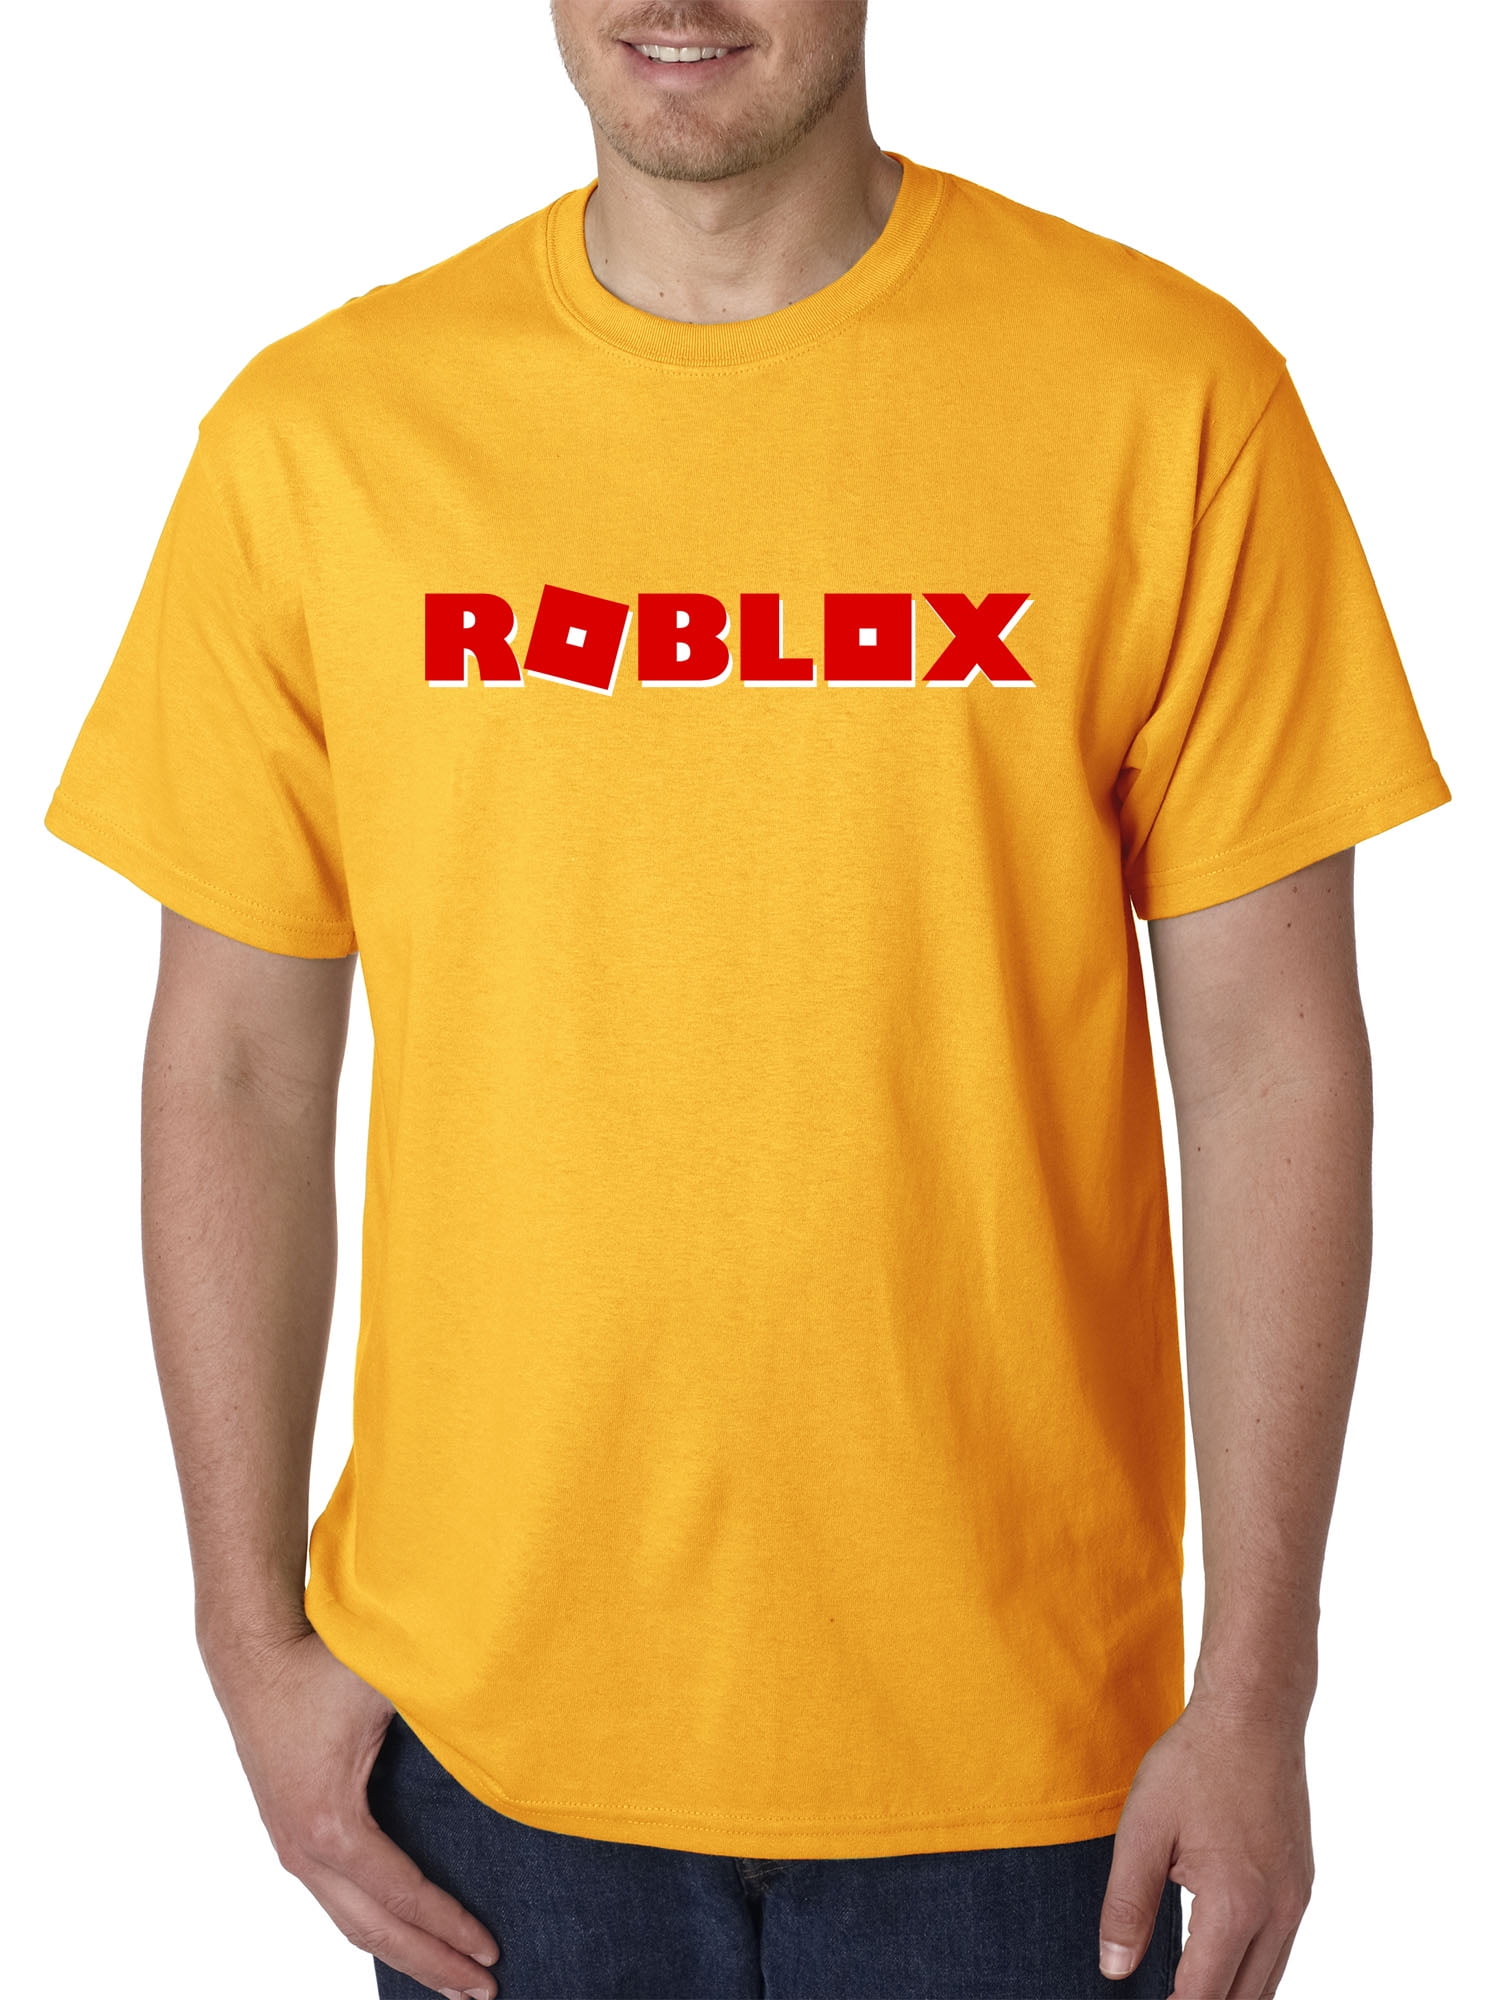 New Way New Way 922 Unisex T Shirt Roblox Logo Game Filled Medium Gold Walmart Com Walmart Com - gold chain t shirt roblox free